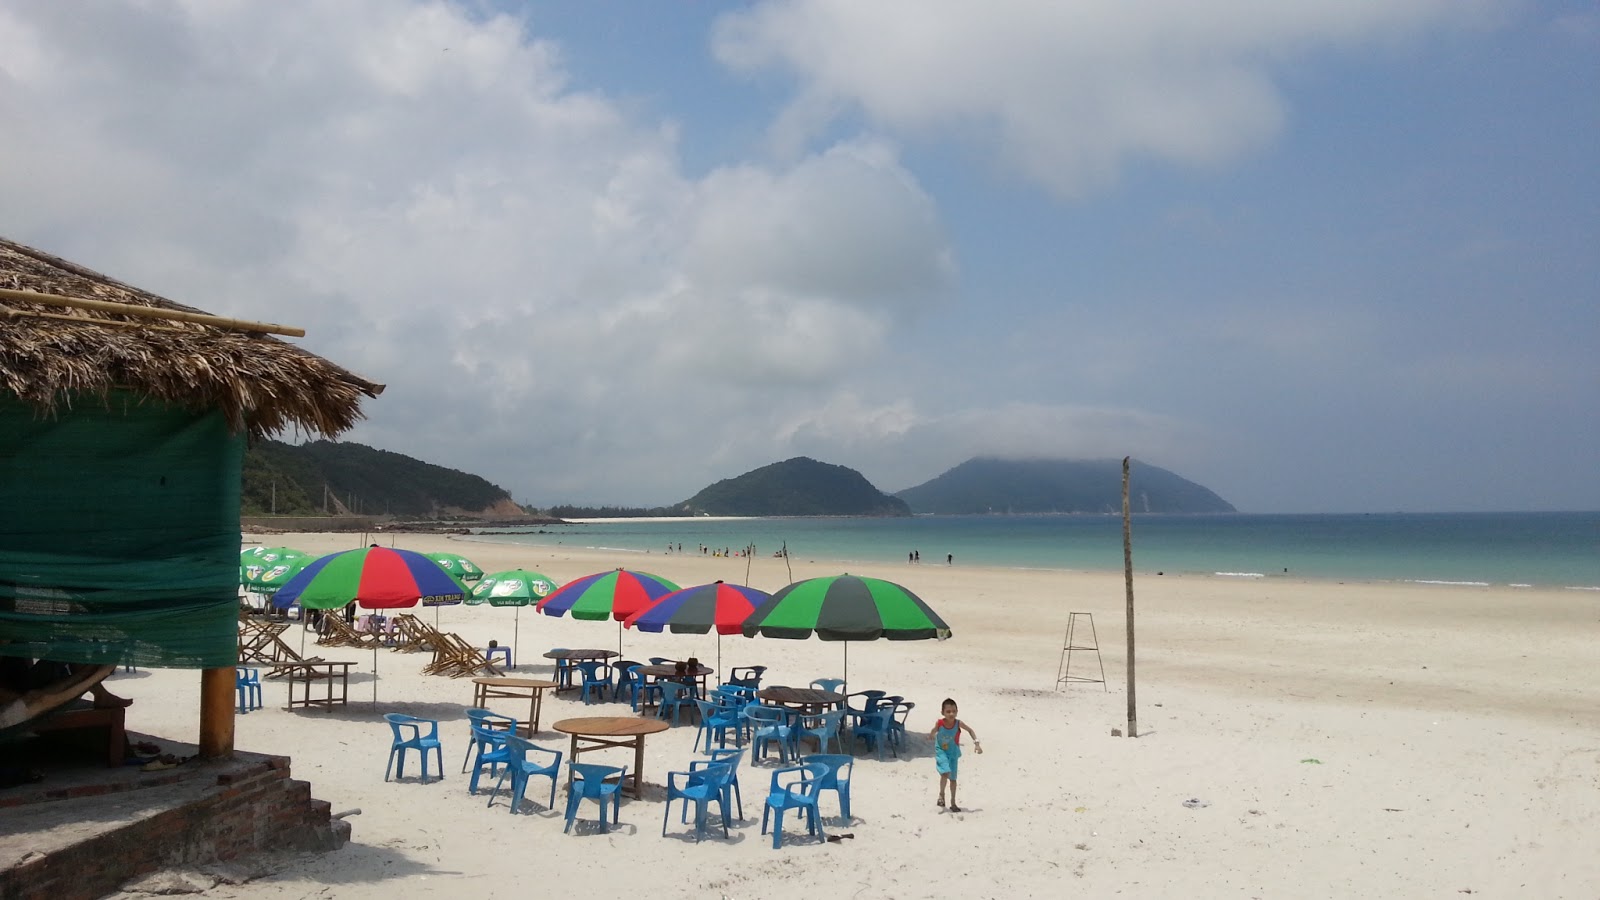 Fotografija Minh Chau Beach nahaja se v naravnem okolju